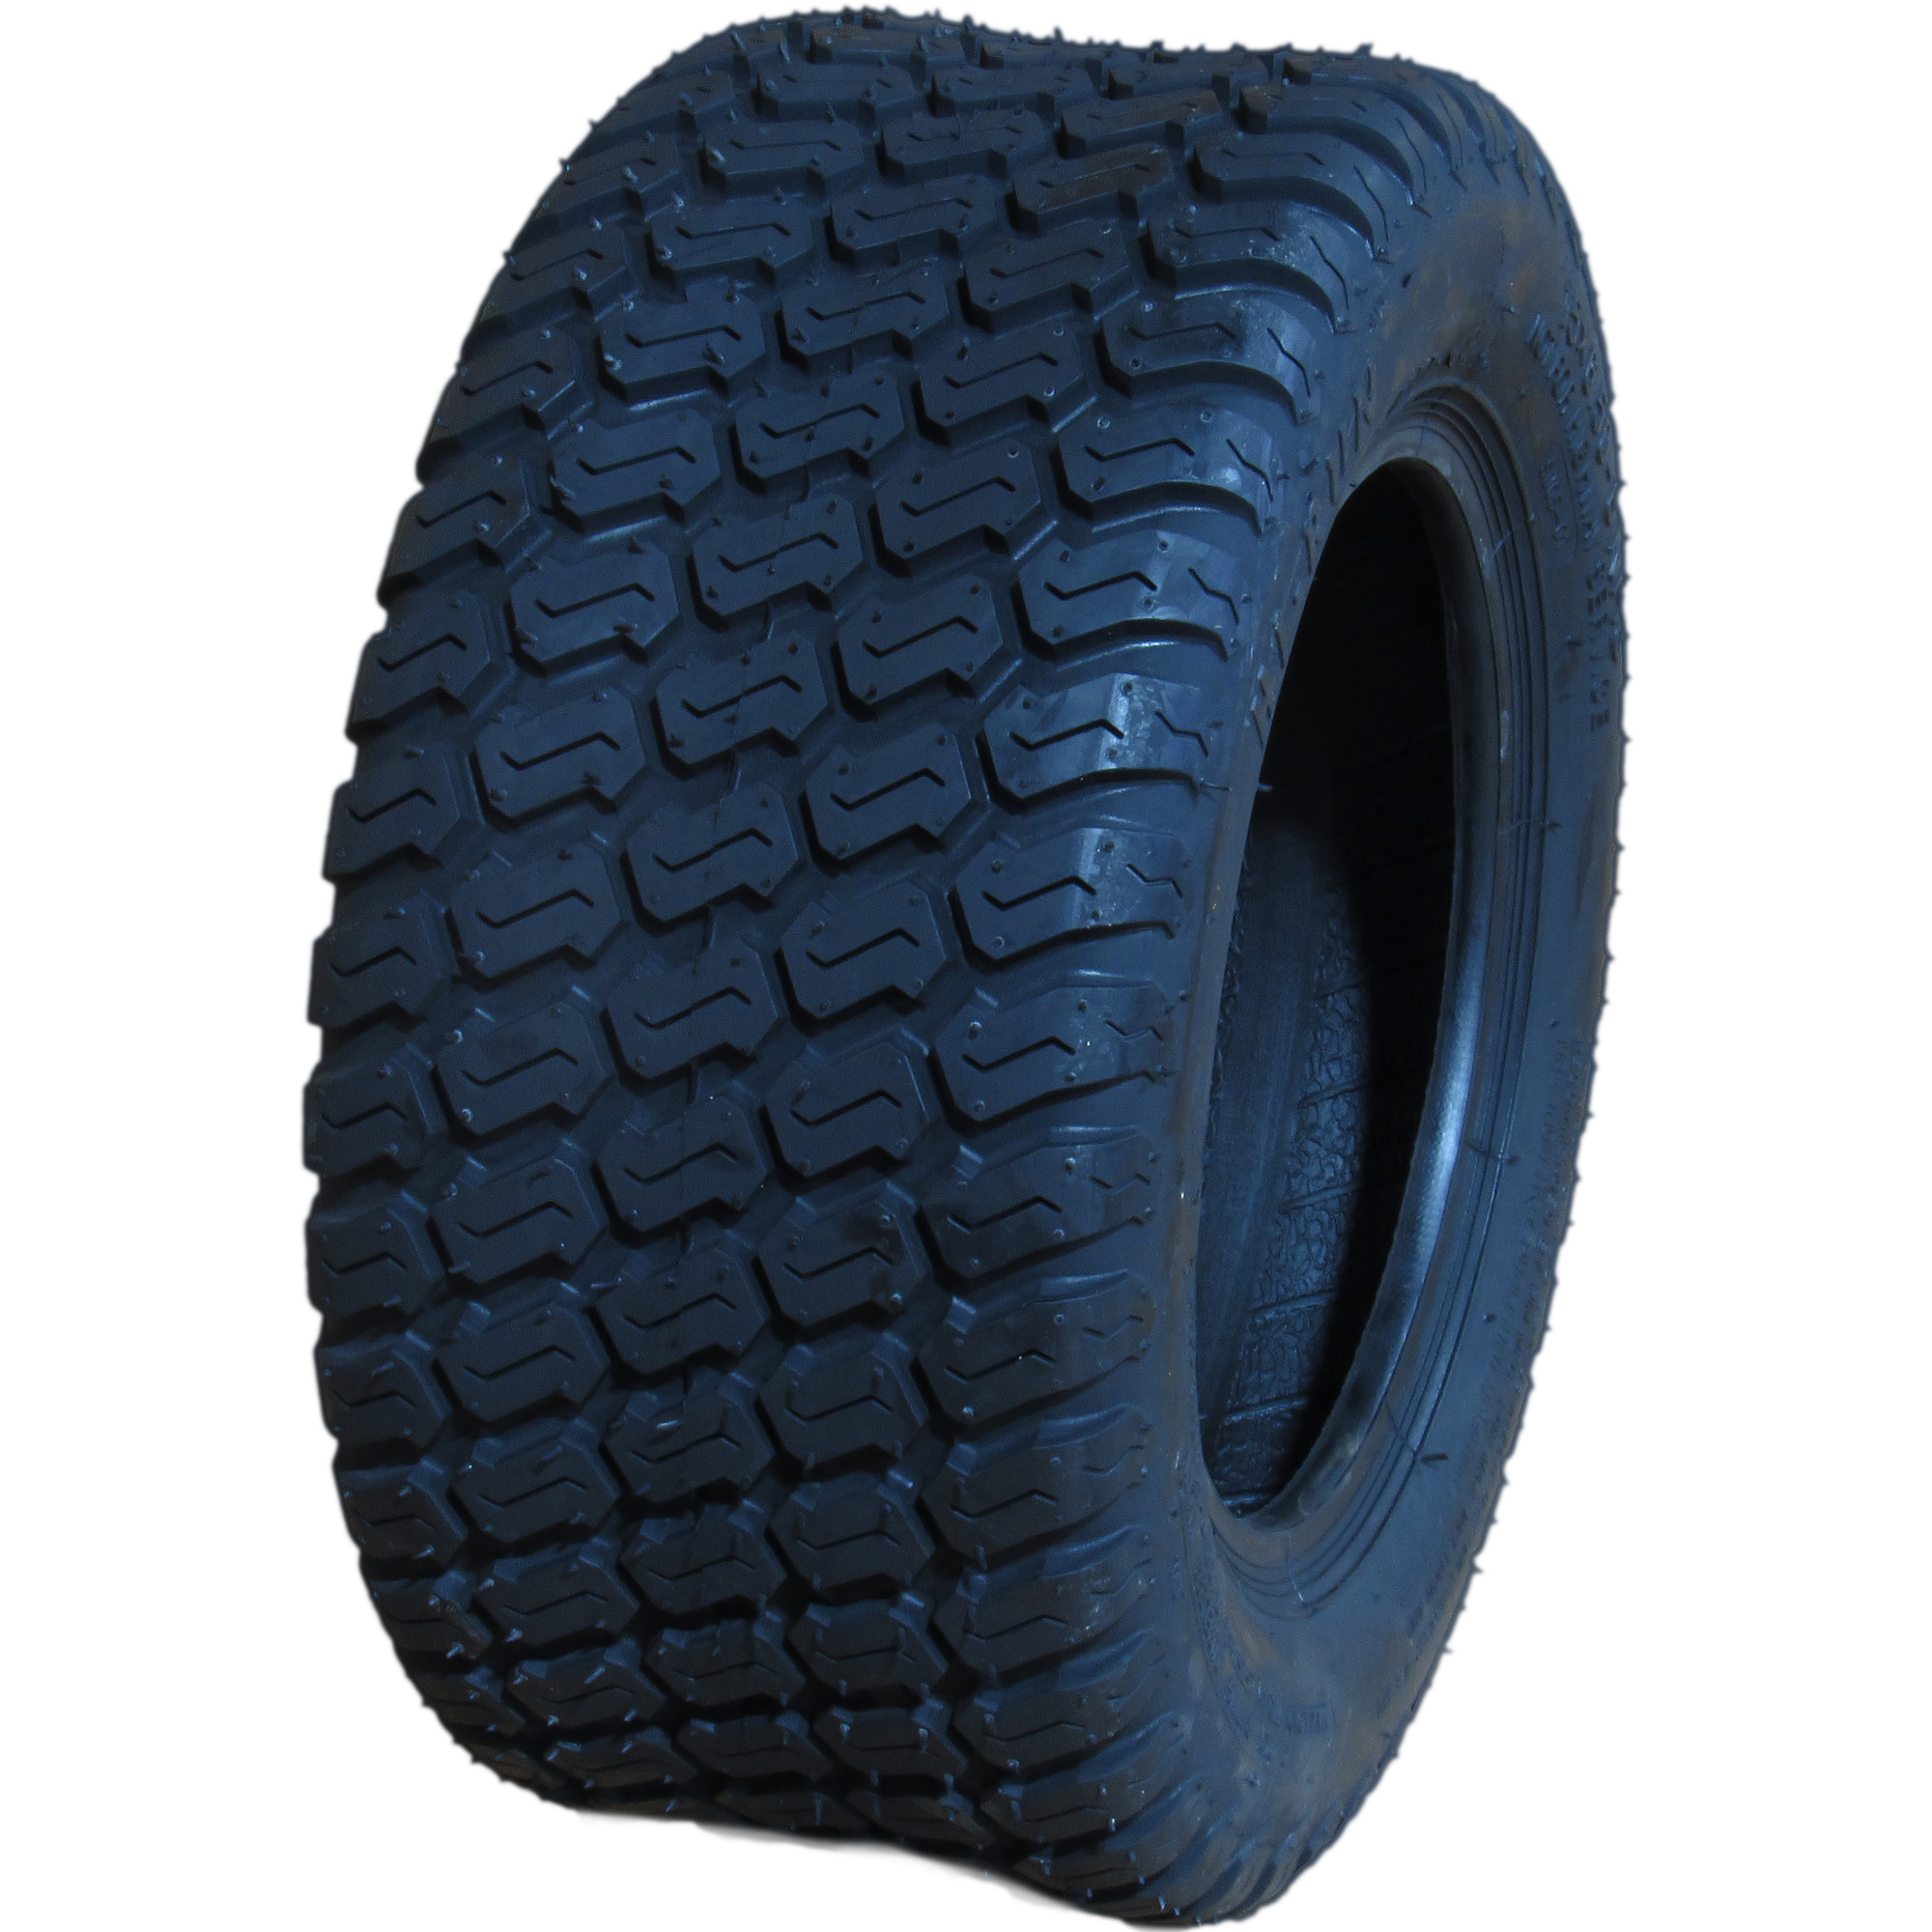 HI-RUN, Lawn Garden Tire, SU05 Turf, Tire Size 15X6.50-8 Load Range Rating A, Model WD1285